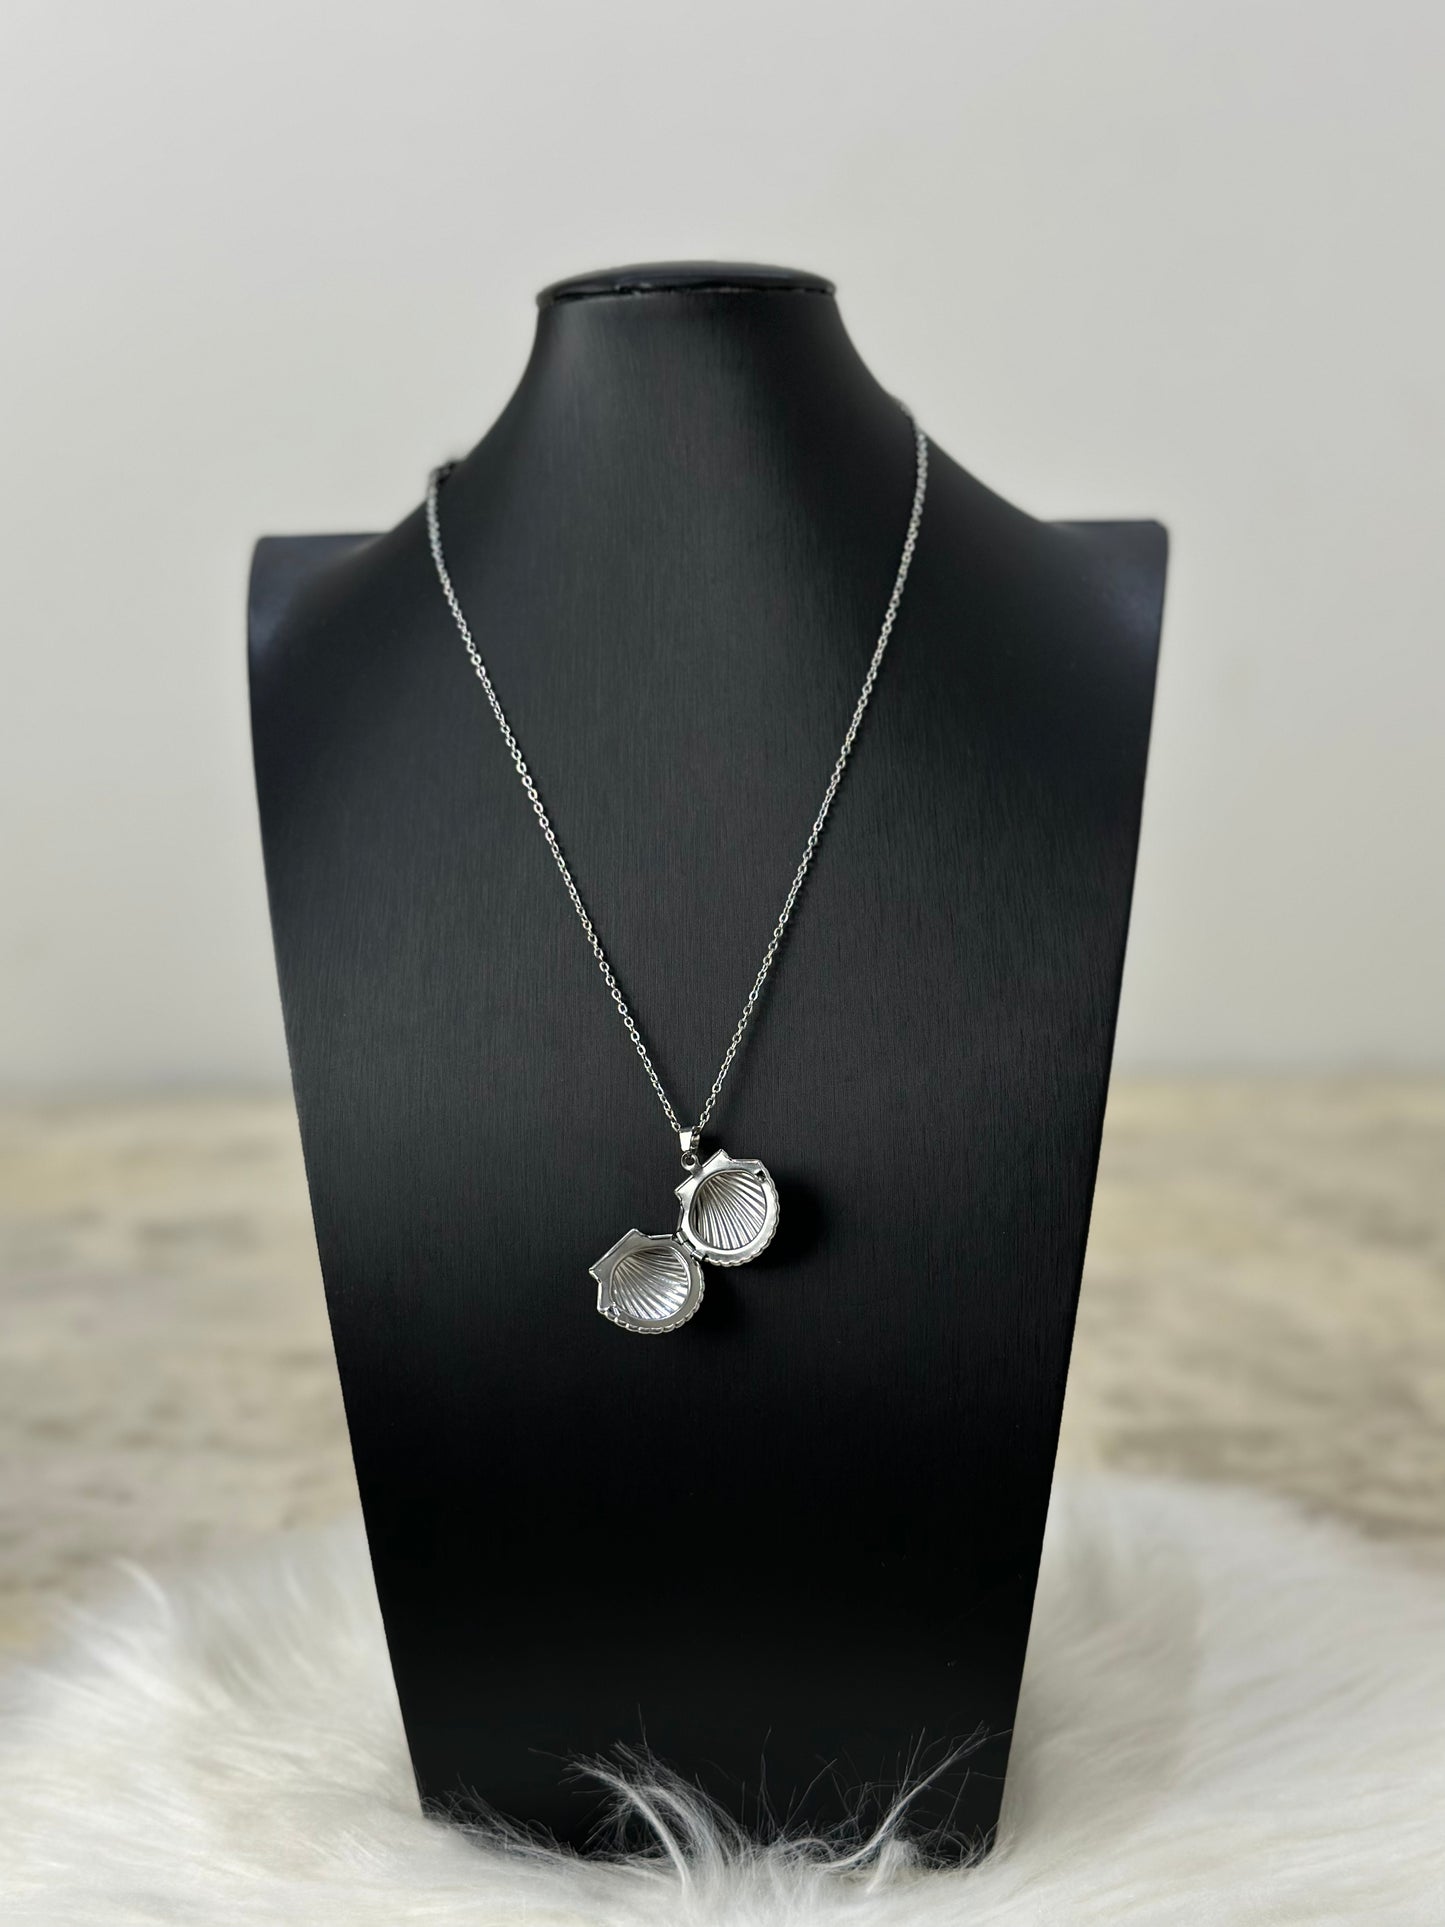 Shell locket necklace